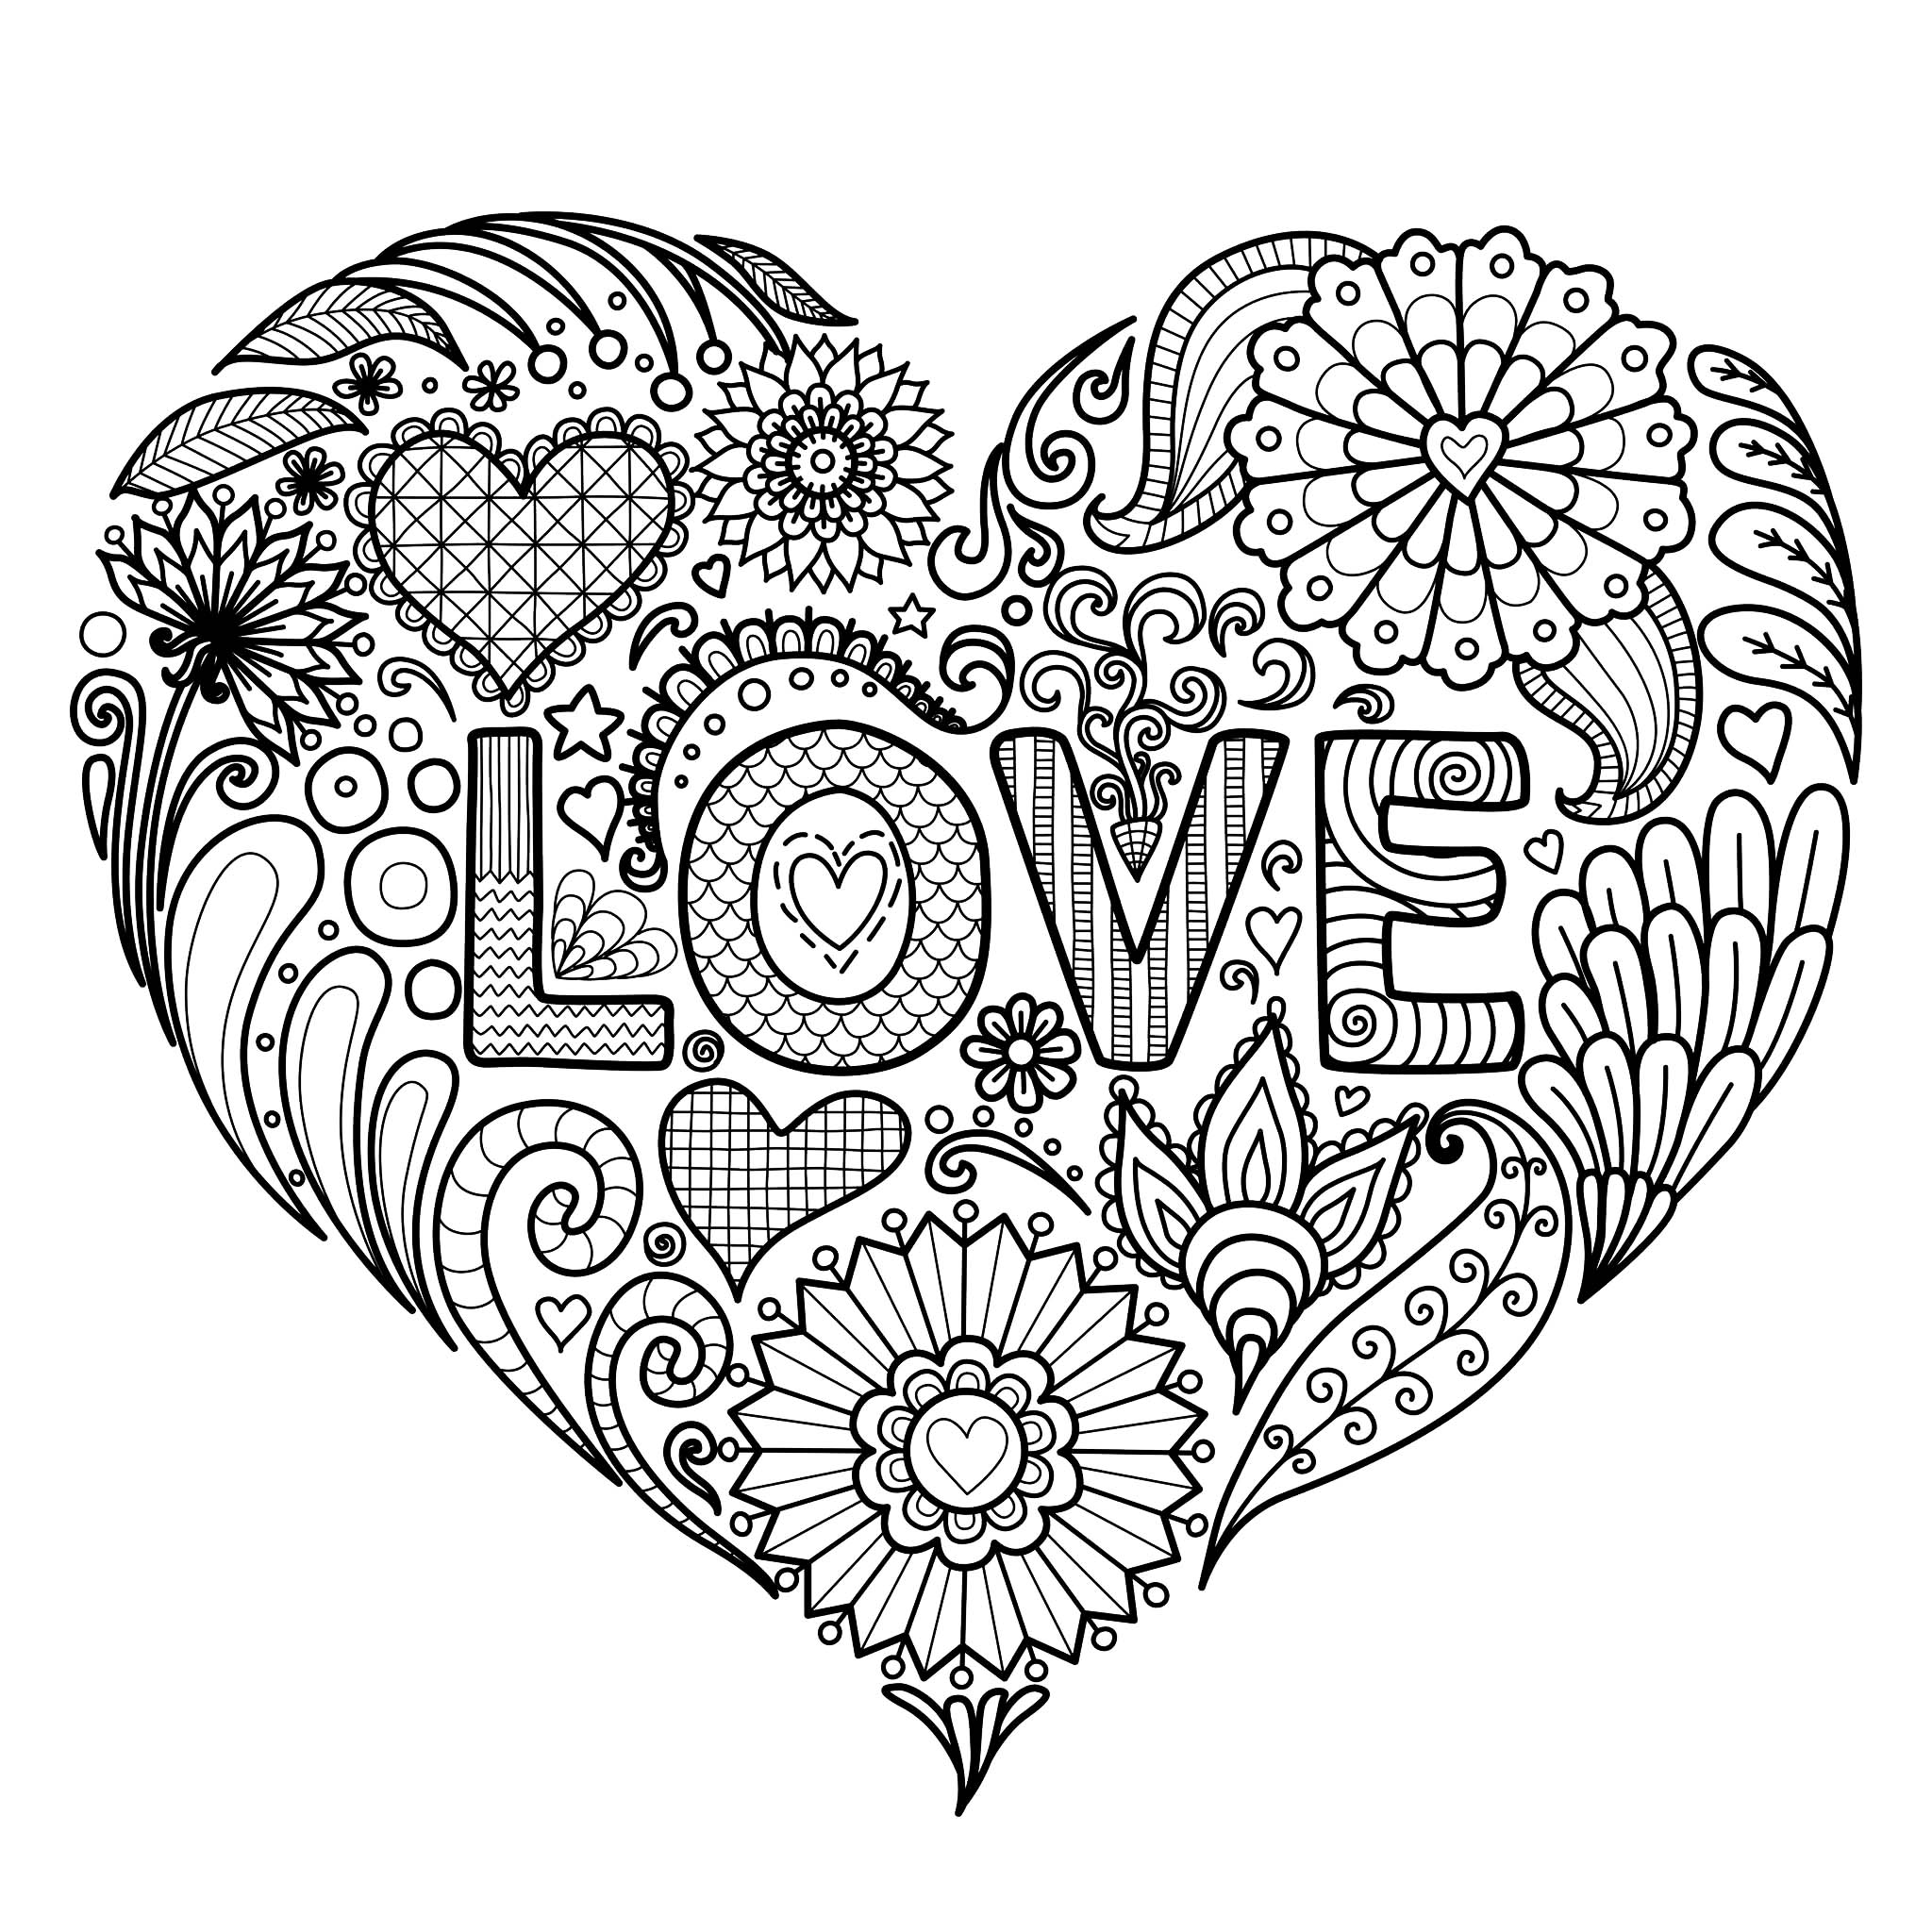 Joli coeur à colorier avec le texte 'LOVE' au milieu, Artiste : Bimdeedee   Source : 123rf